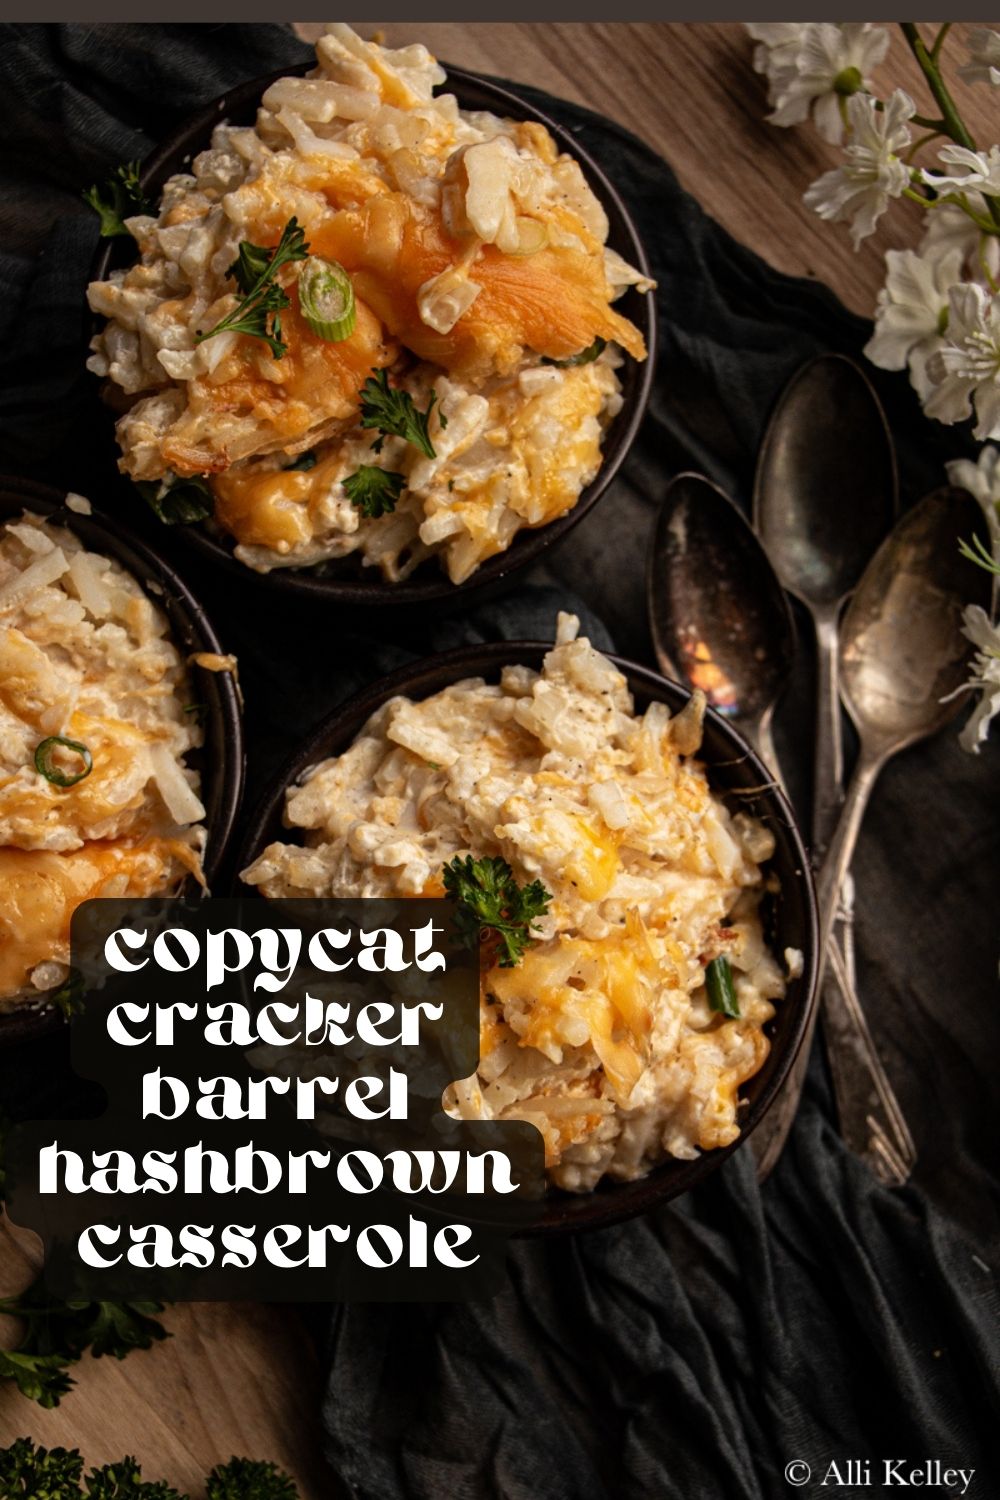 Crock Pot Hash Brown Casserole - Slow cooker recipe